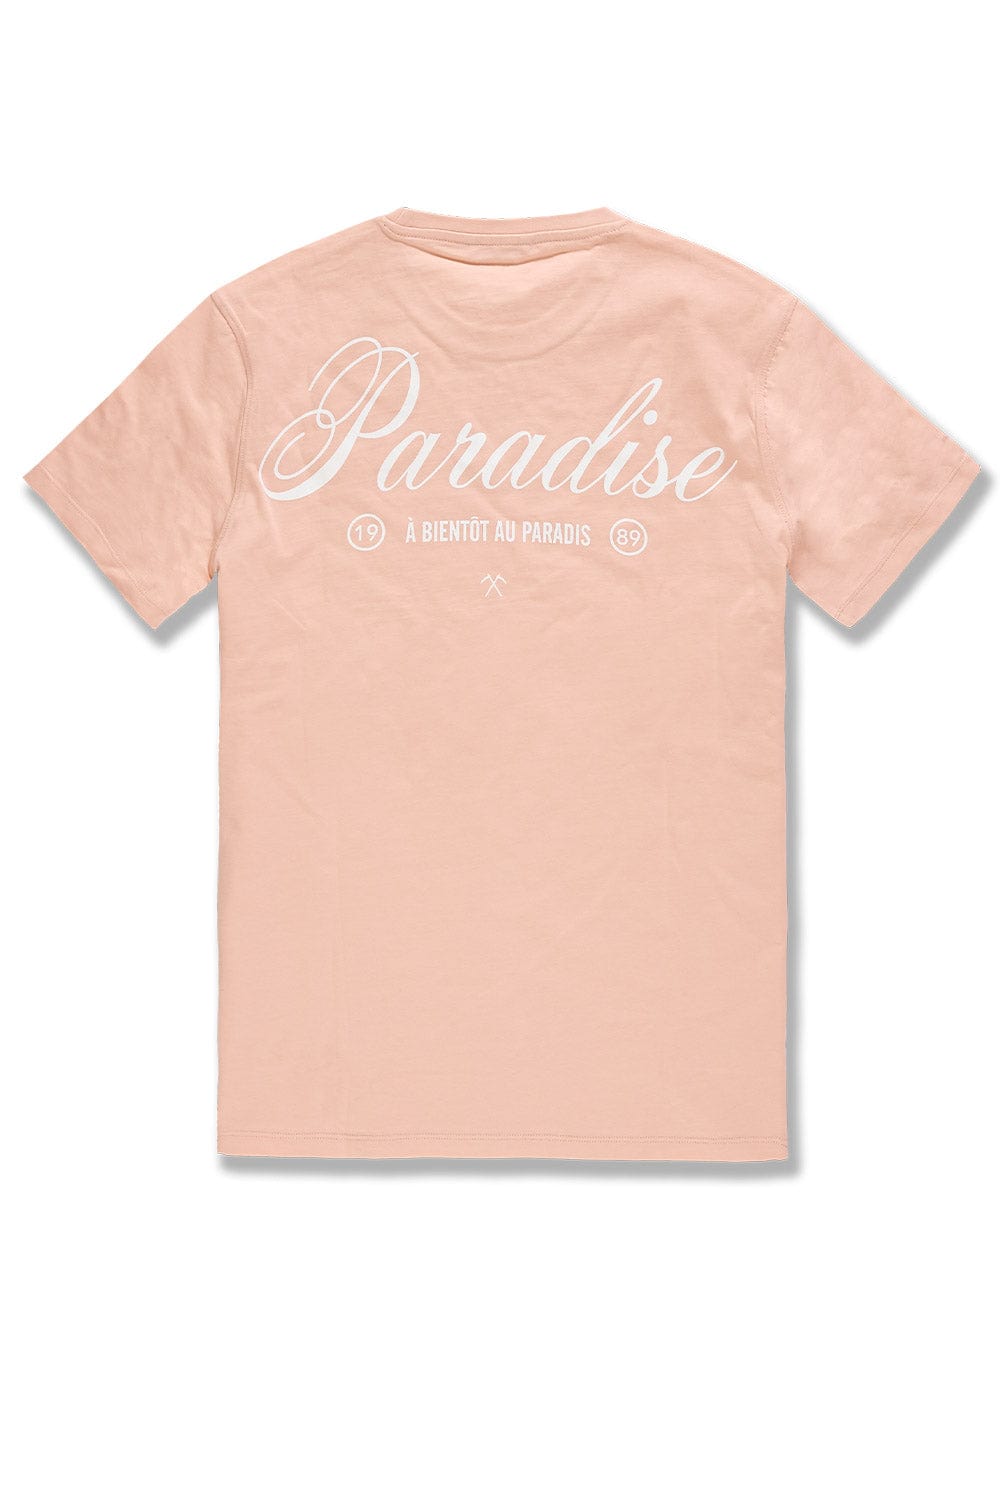 BB Paradise T-Shirt (Pink)